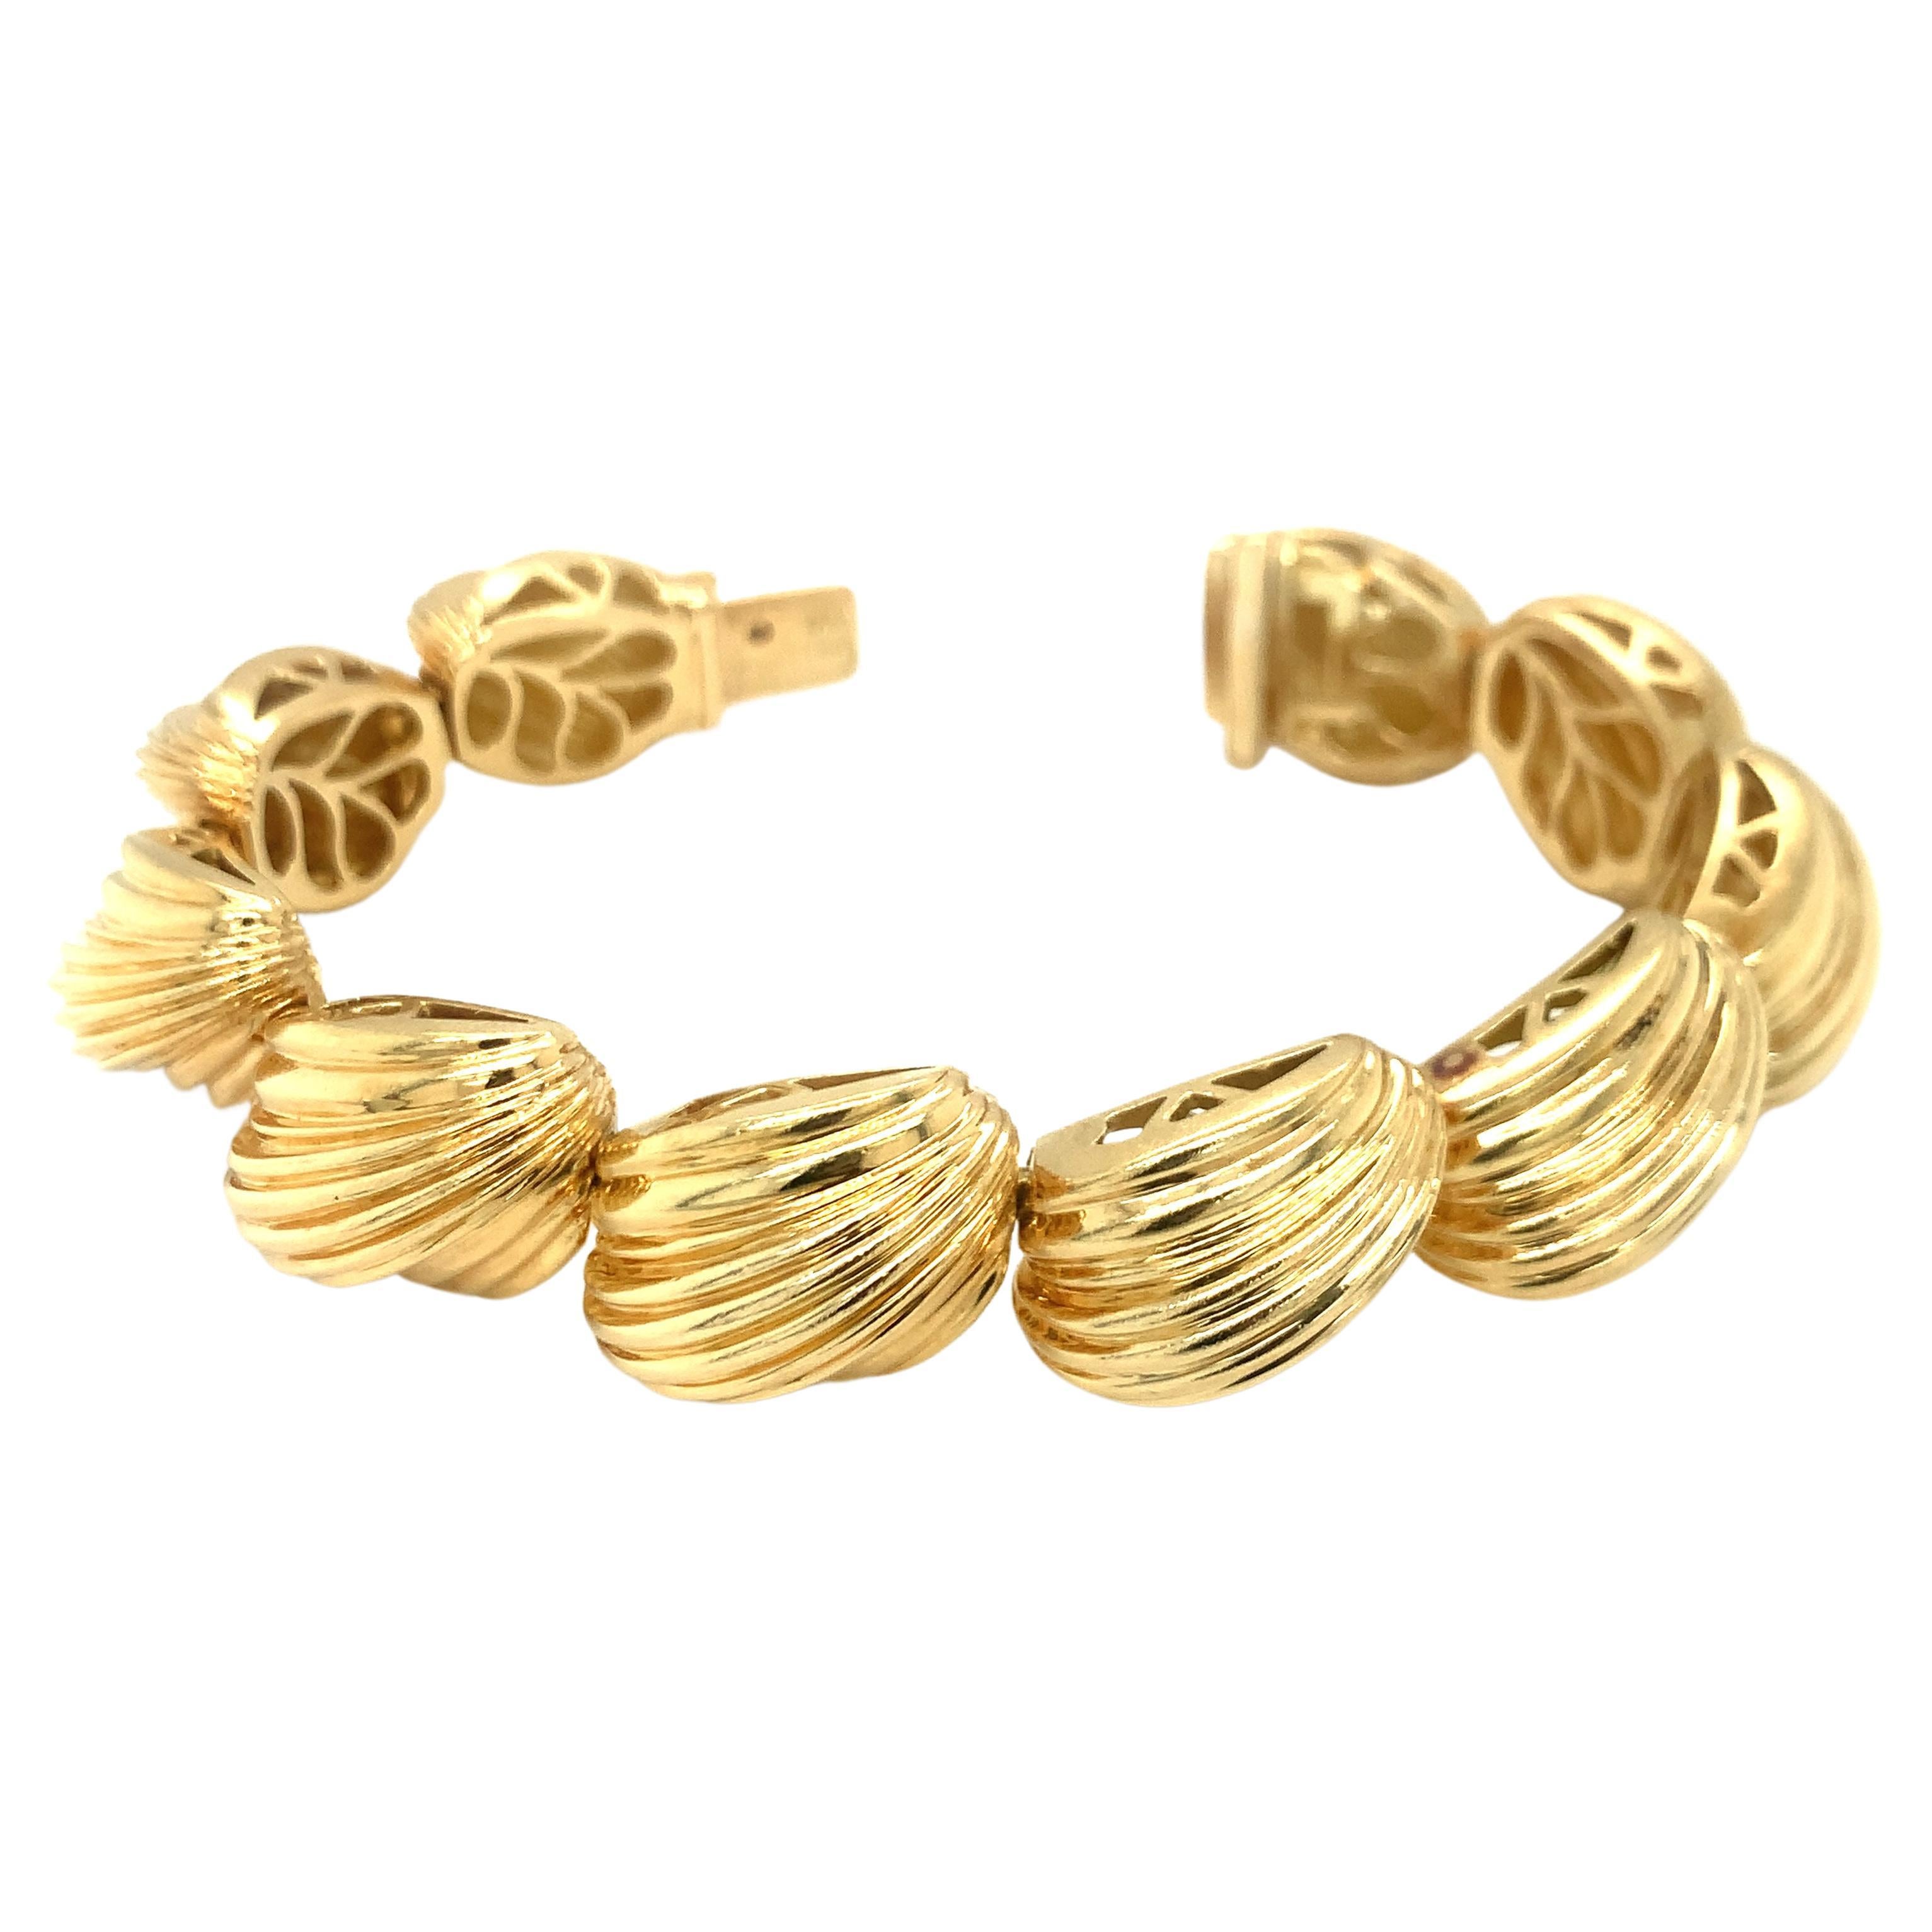 0.65 Carat Men's Gucci Link Diamond Bracelet 14k Solid White Gold 